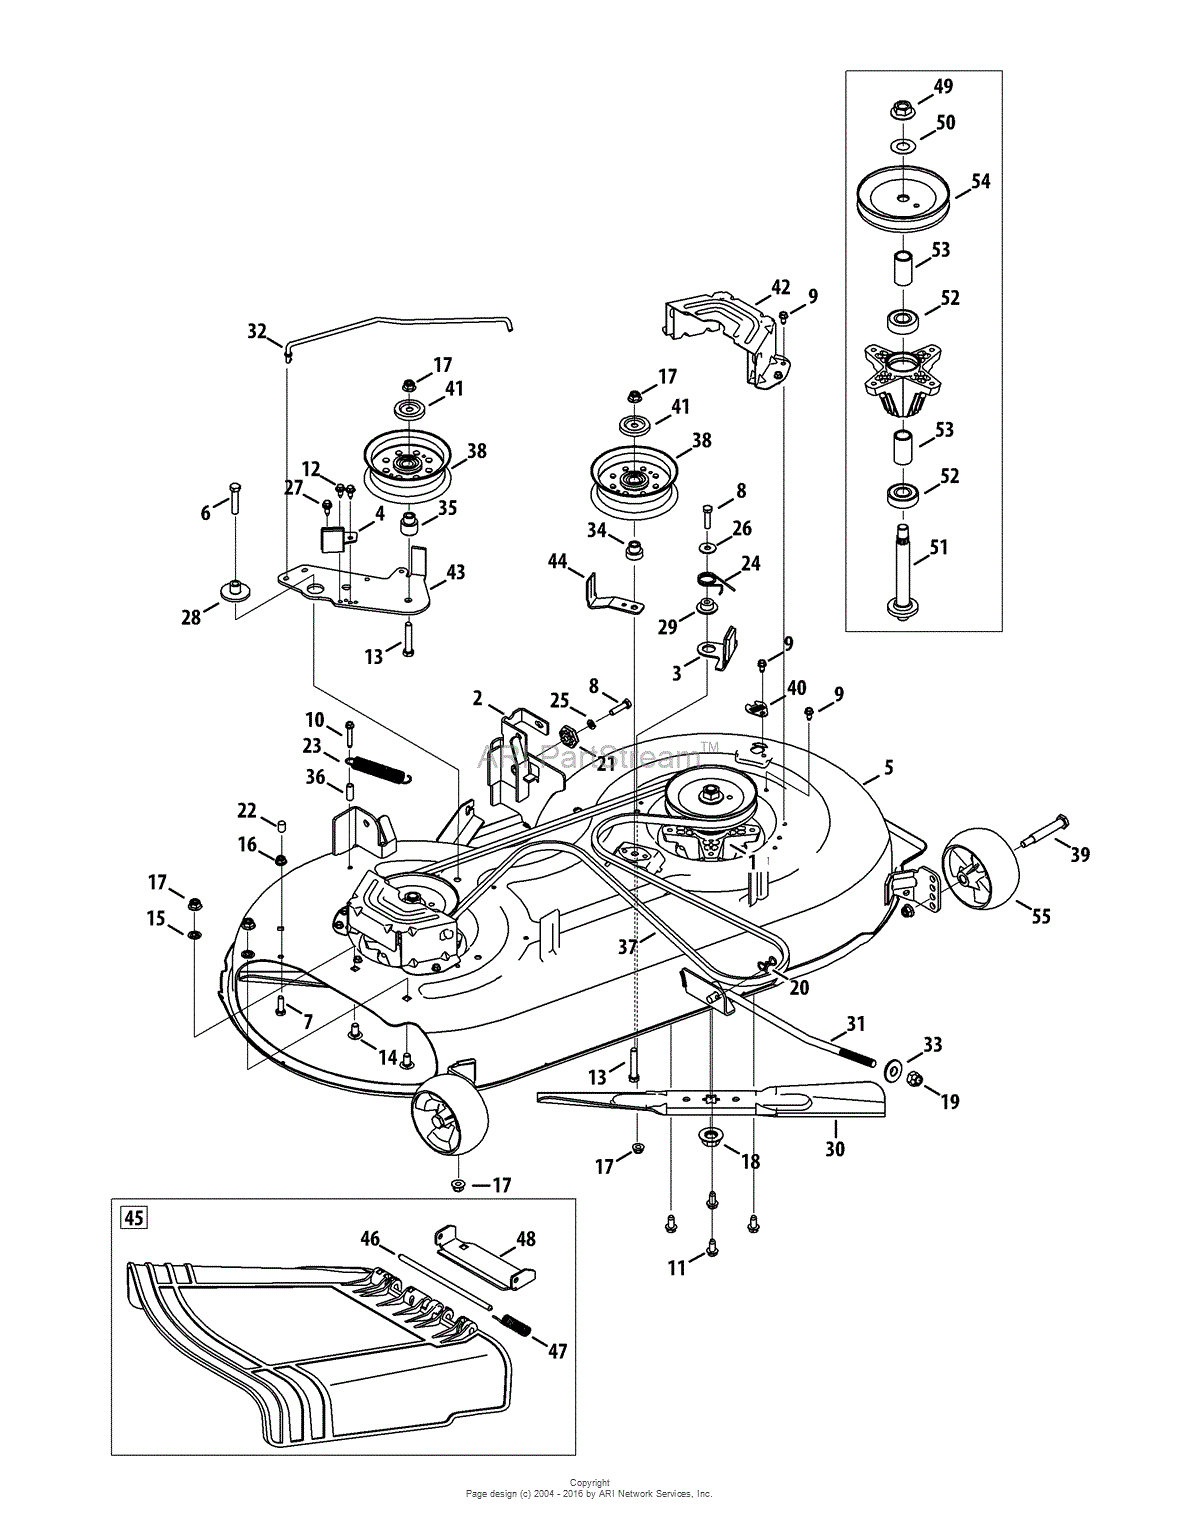 13+ Craftsman Lt1000 Parts Diagram - BrennenLiya